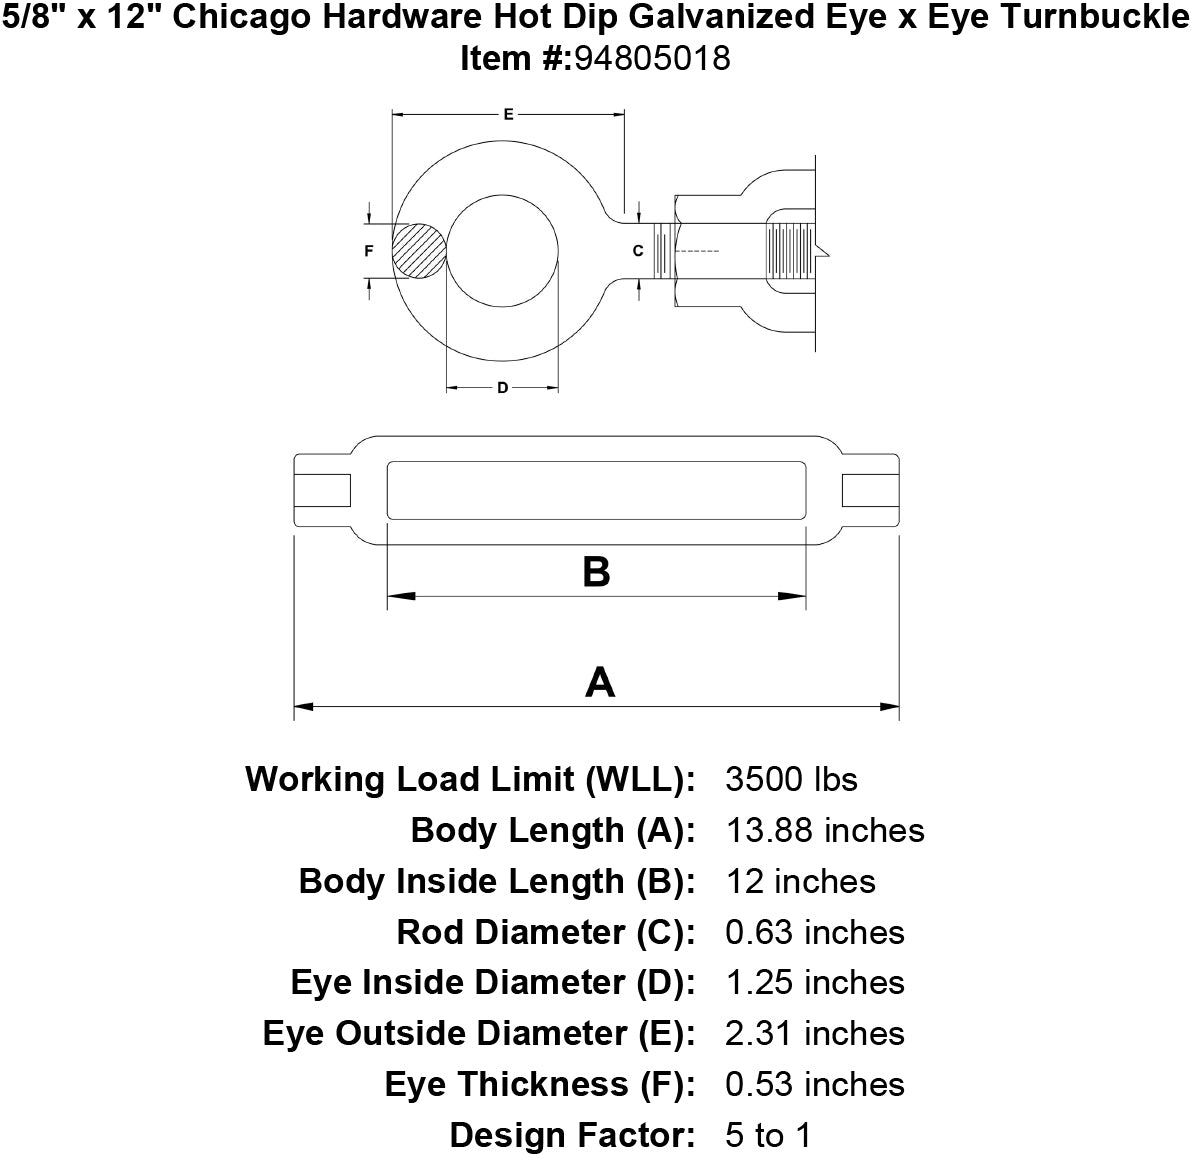 Chicago Hardware Hot Dip Galvanized Eye x Eye Turnbuckles